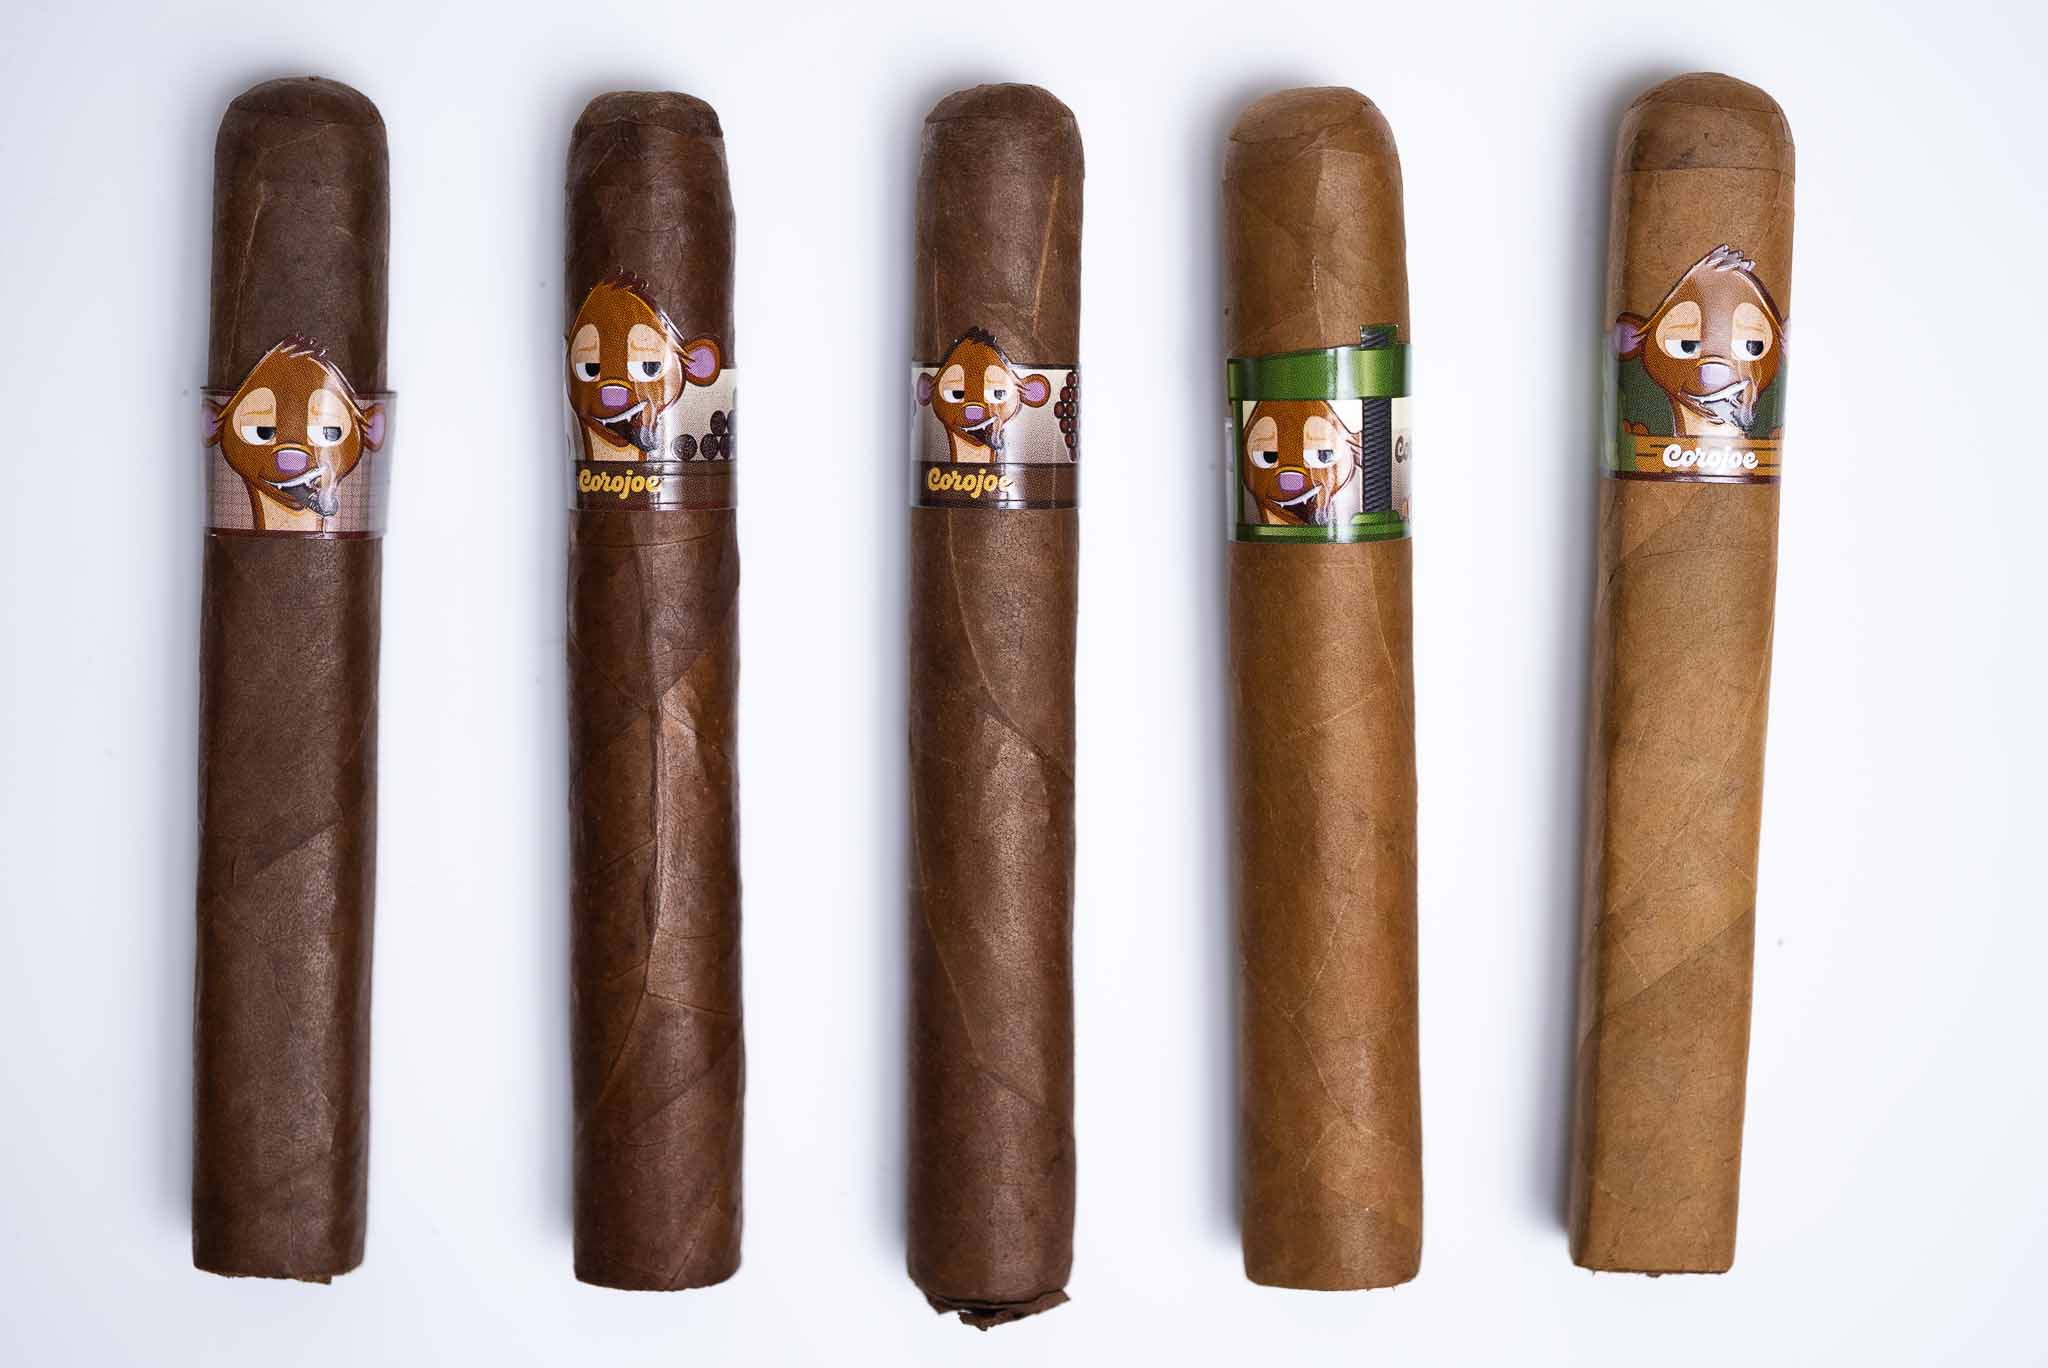 Corojoe Pack Of Cigars For Sale